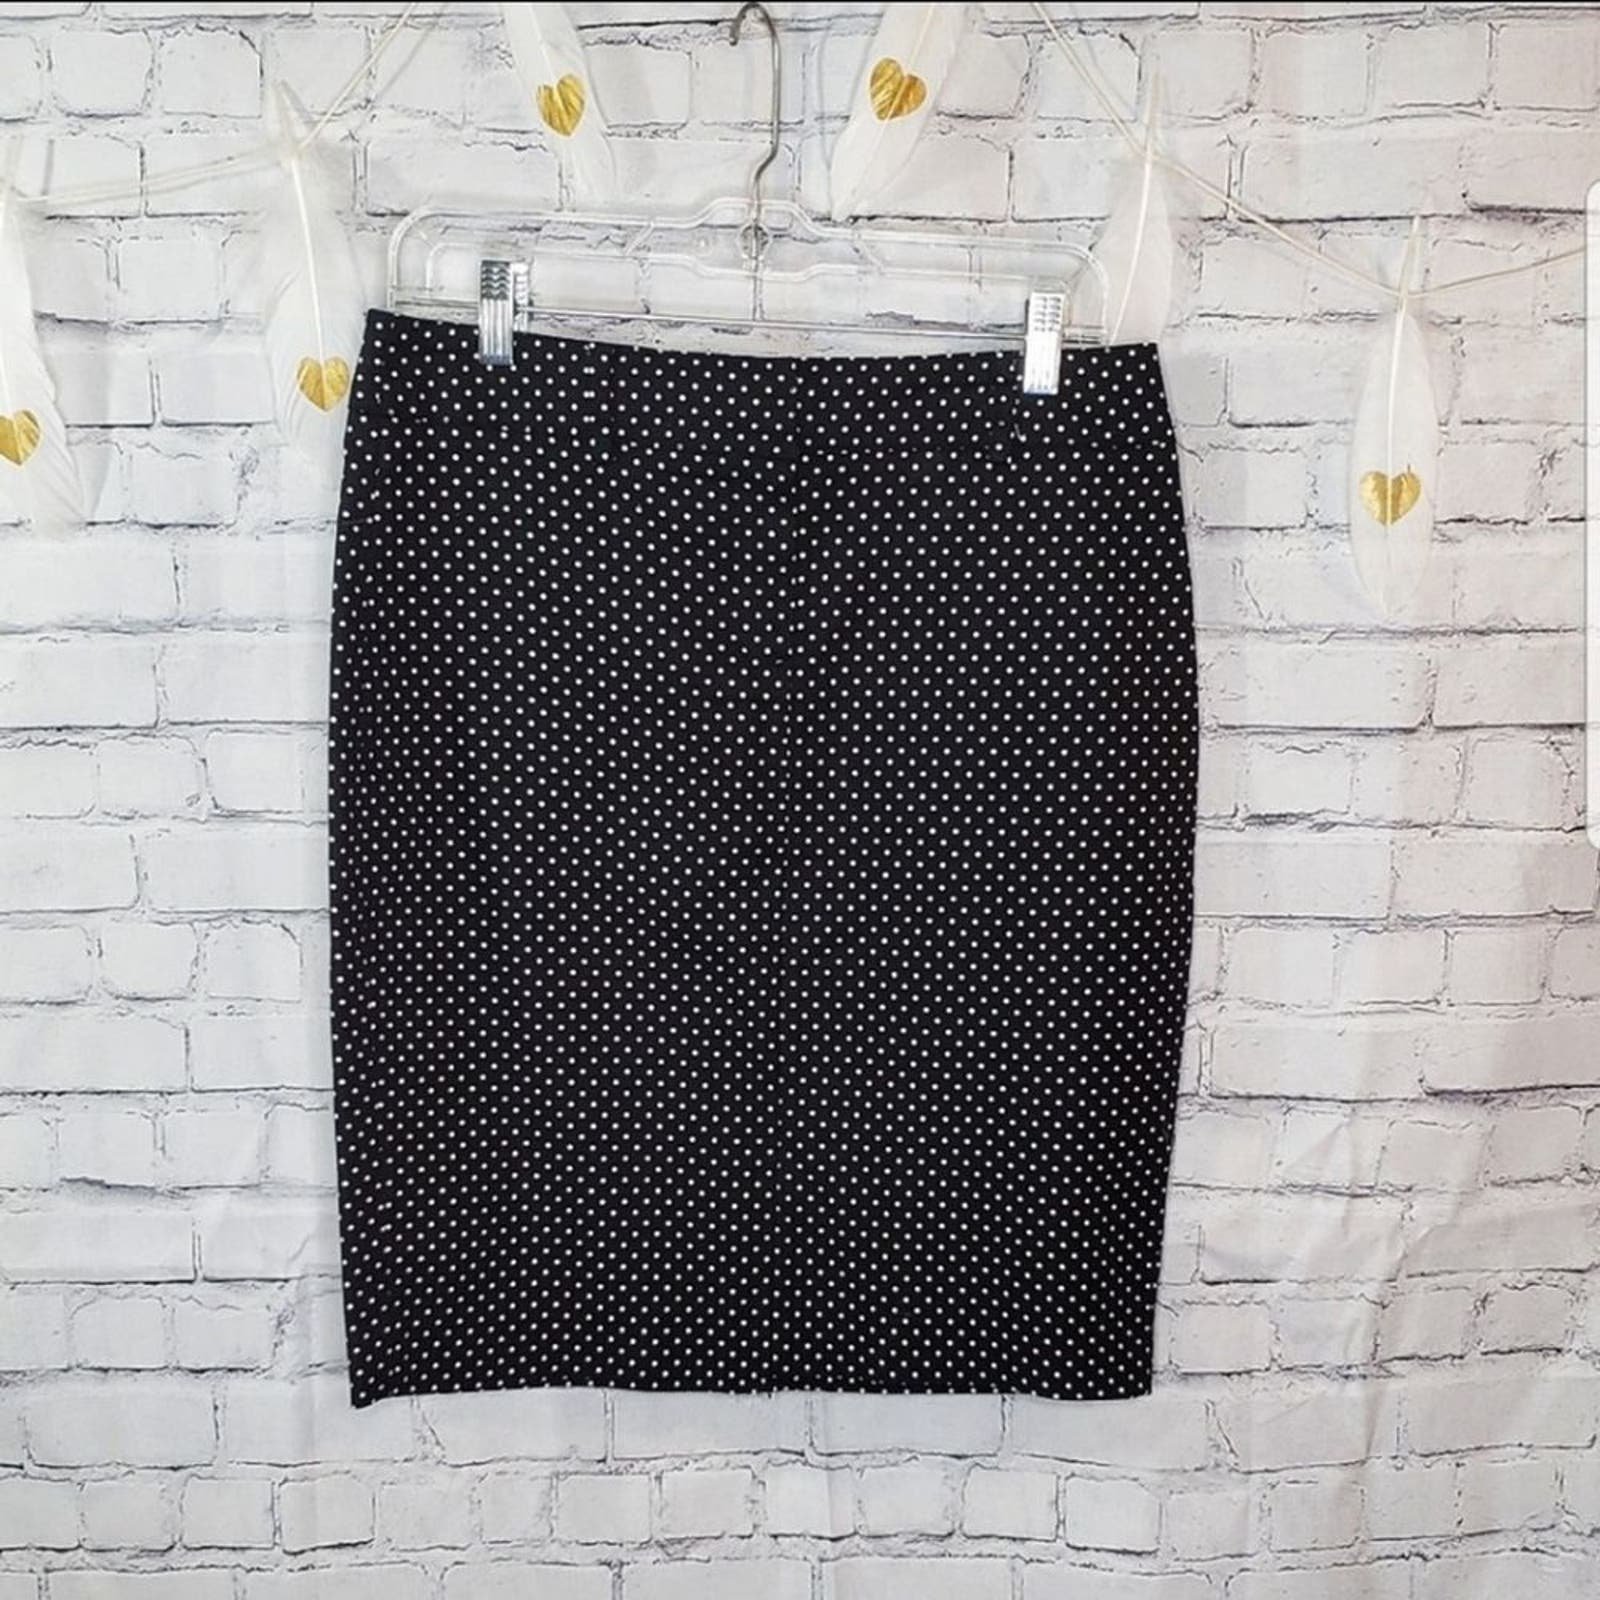 Perfect Sharagano Black Polka Dot Pencil Skirt Sz 6 ppMlpq2Uz online store